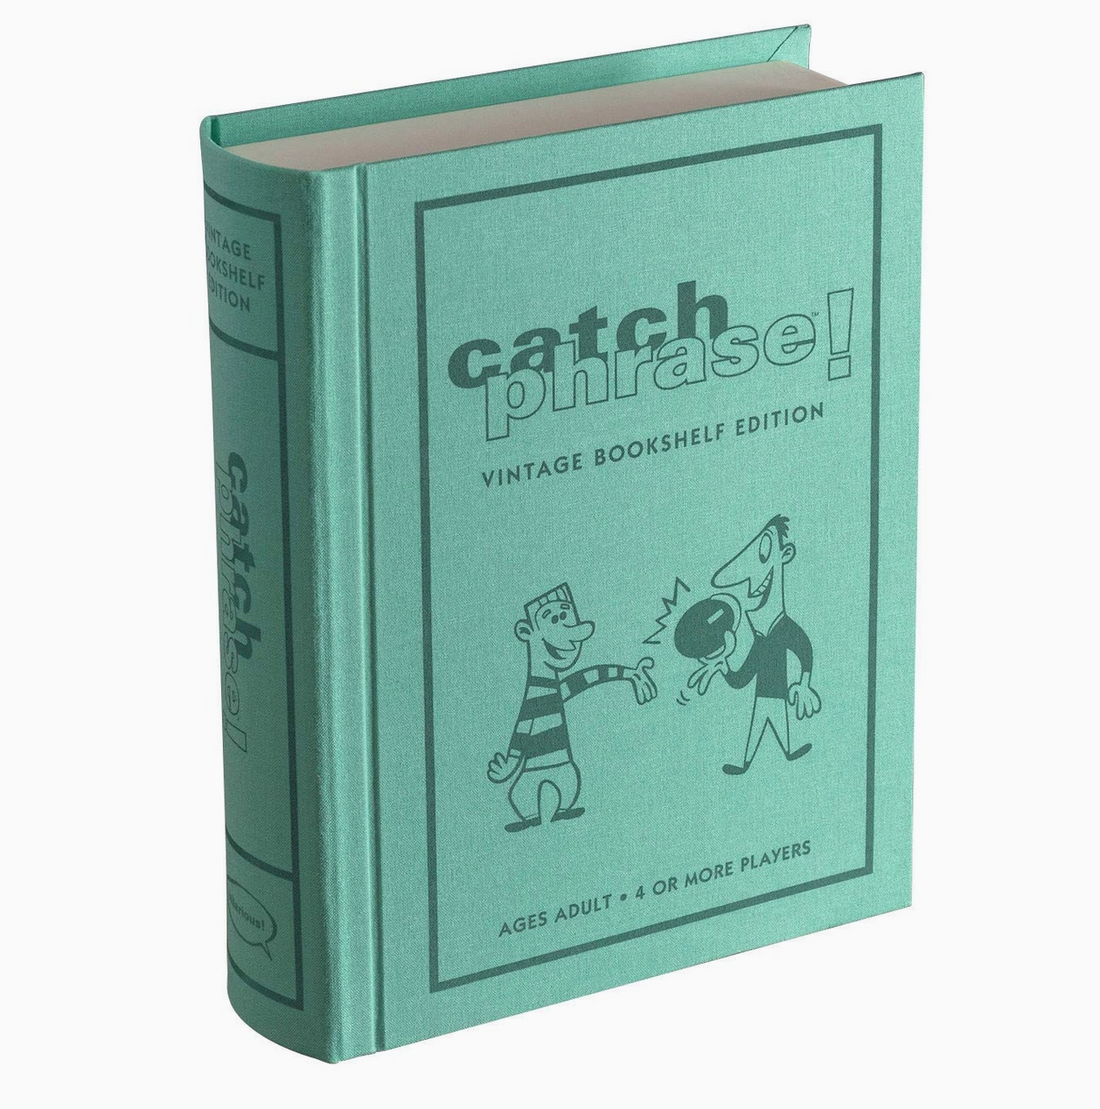 Catch Phrase (Vintage Bookshelf Edition)